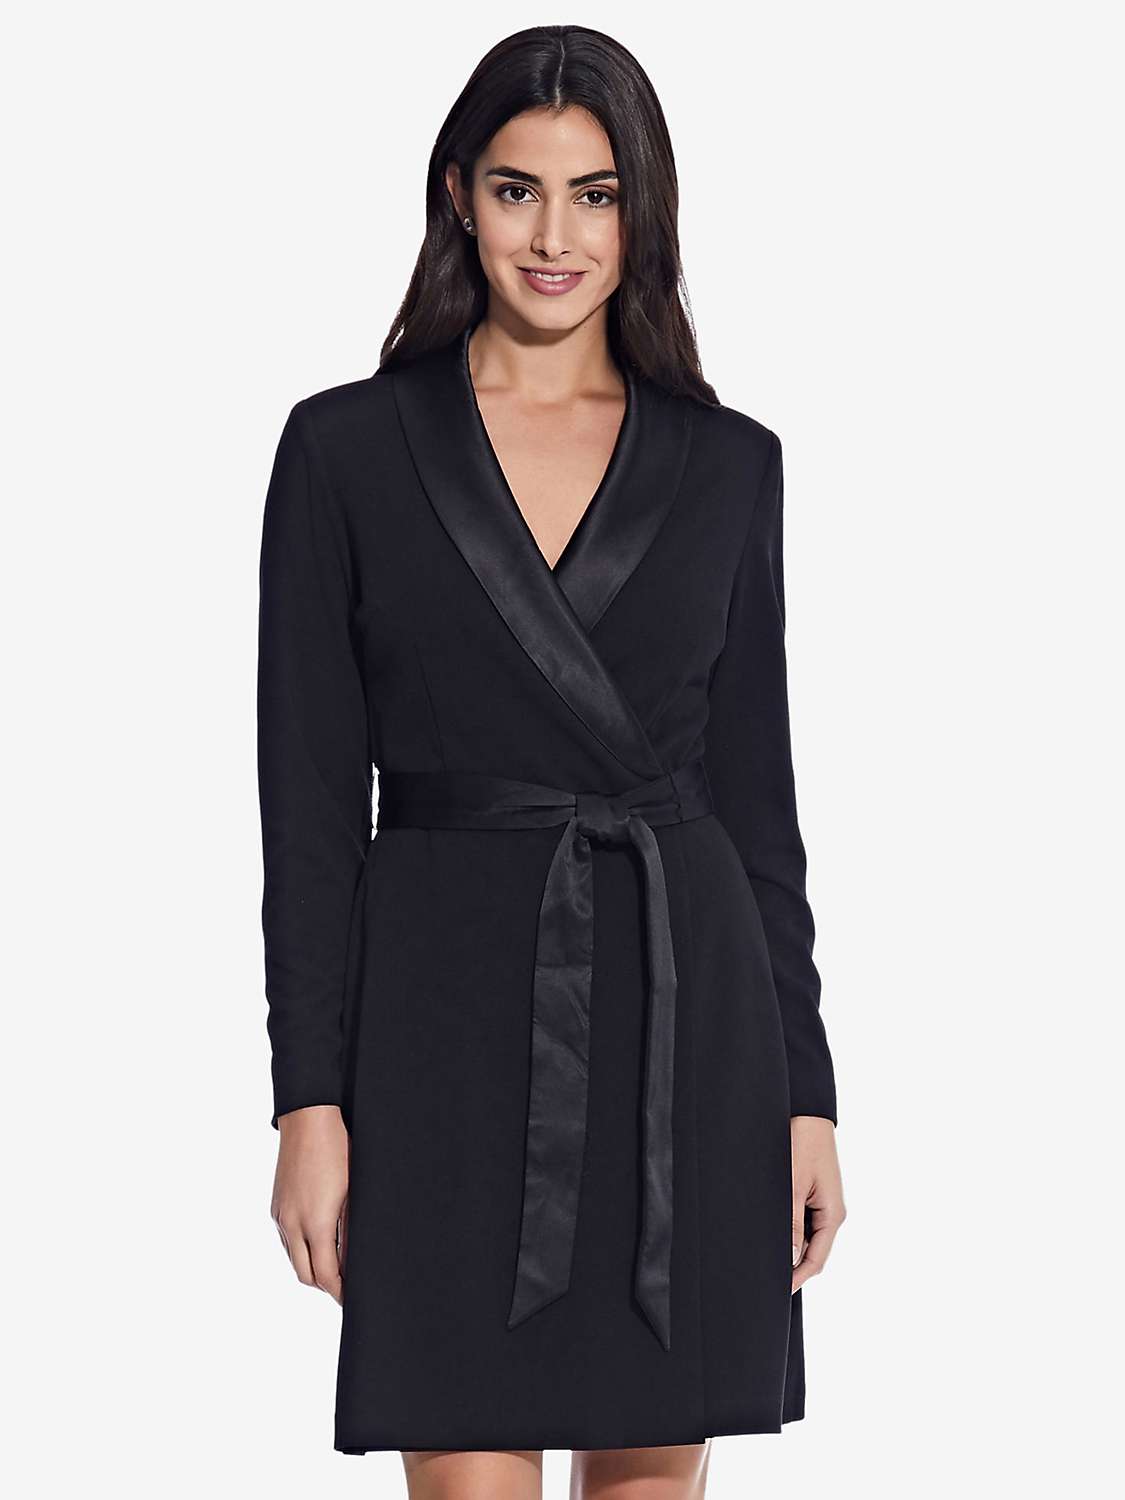 Buy Adrianna Papell Crepe Tuxedo A-Line Dress, Black Online at johnlewis.com